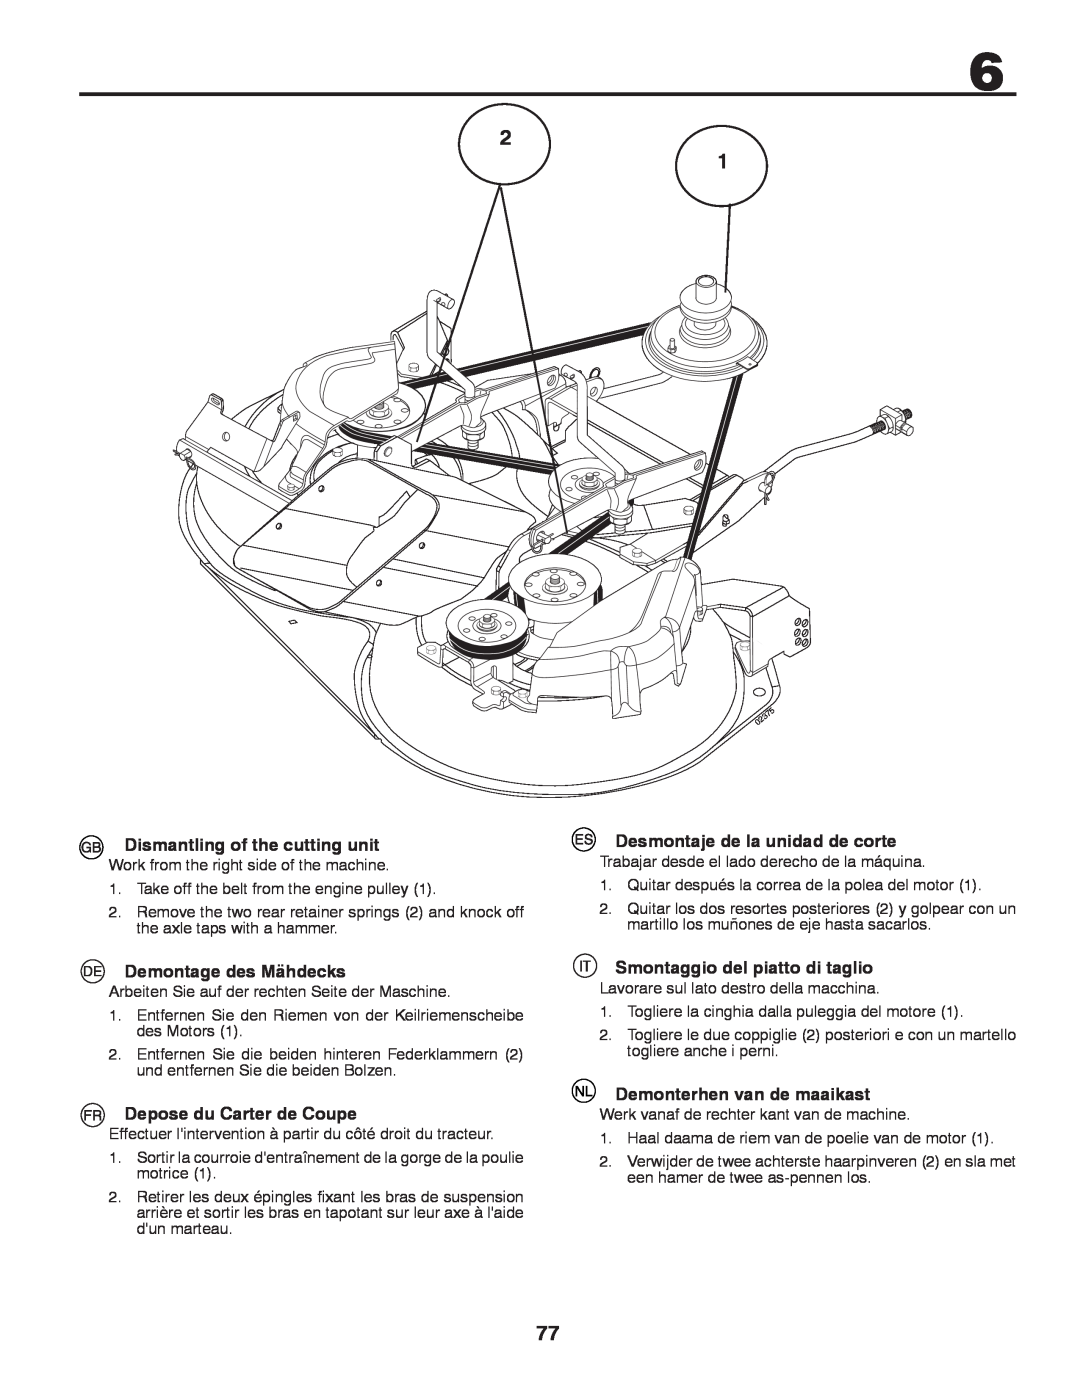 Husqvarna CTH140TWIN instruction manual Dismantling of the cutting unit, Demontage des Mähdecks, Depose du Carter de Coupe 